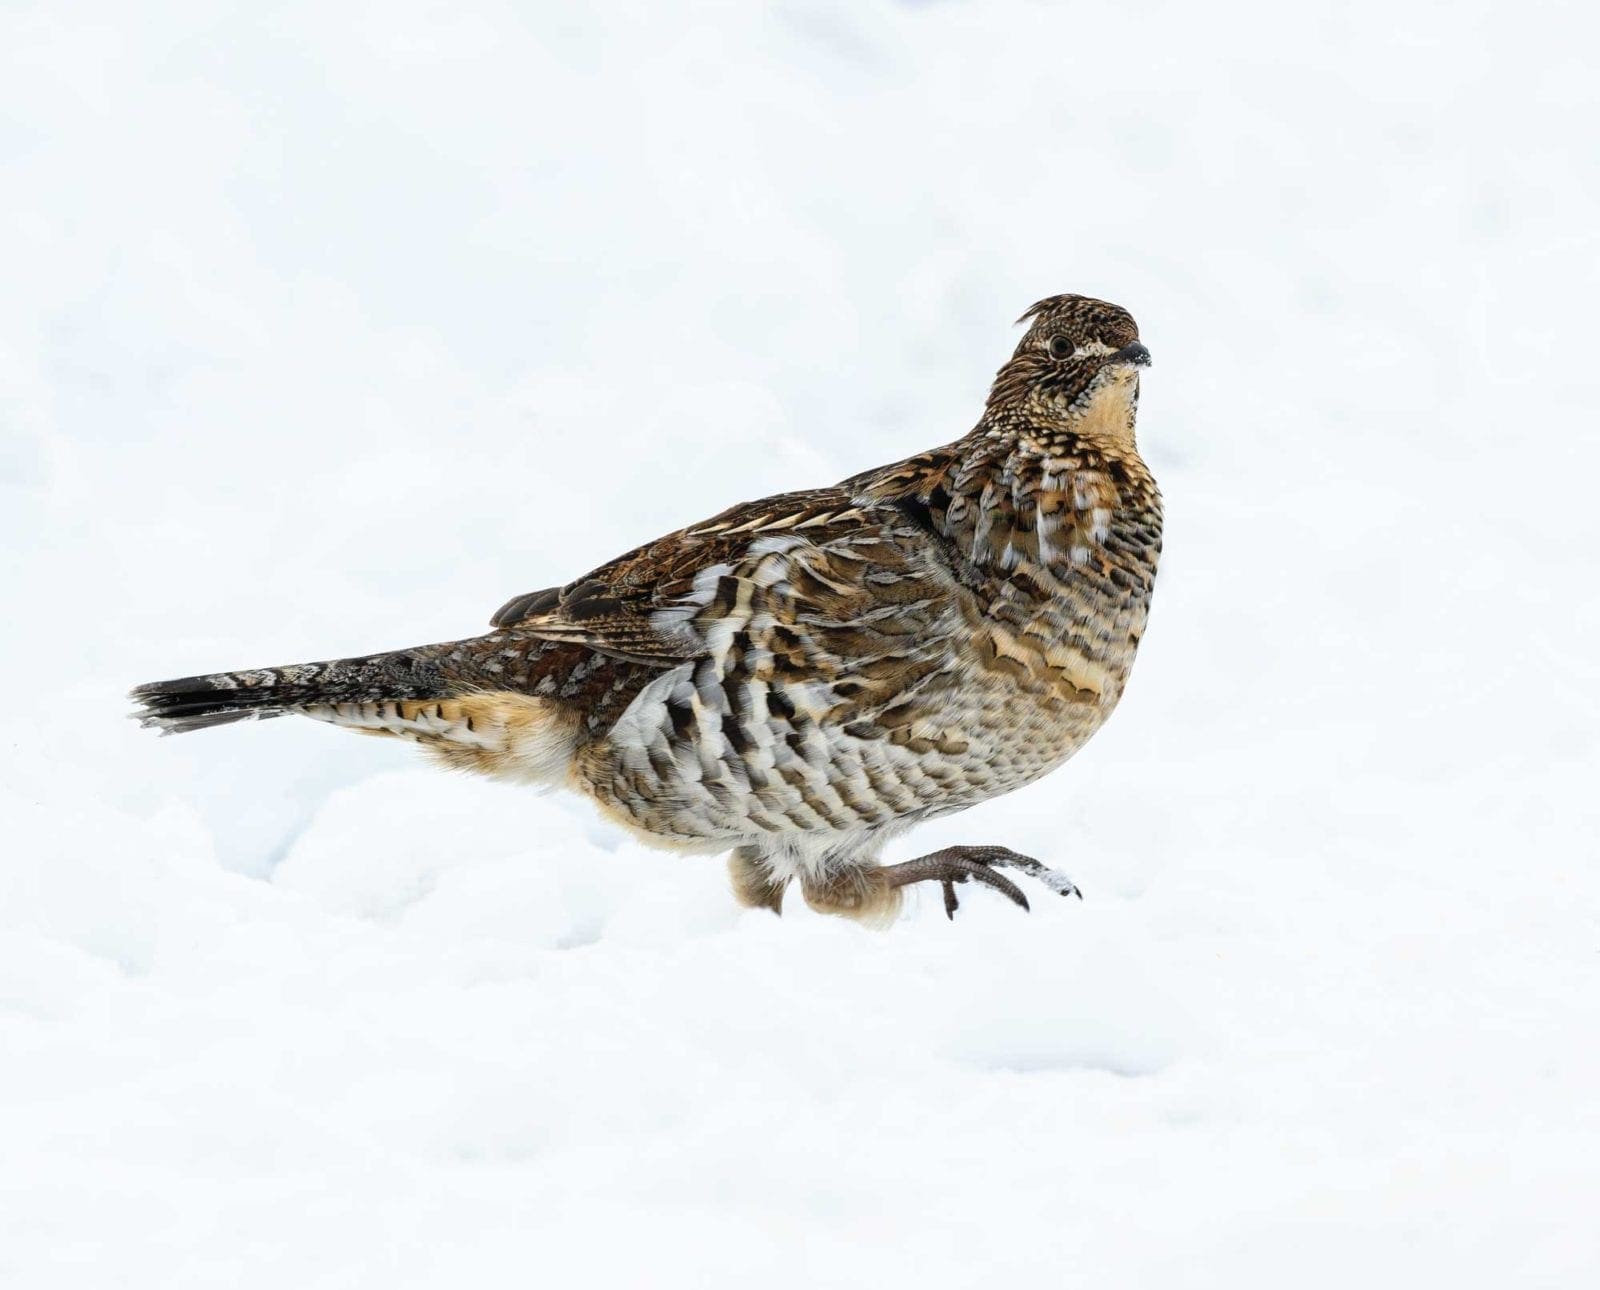 A ruffed grouse walking through snow leaving tracks